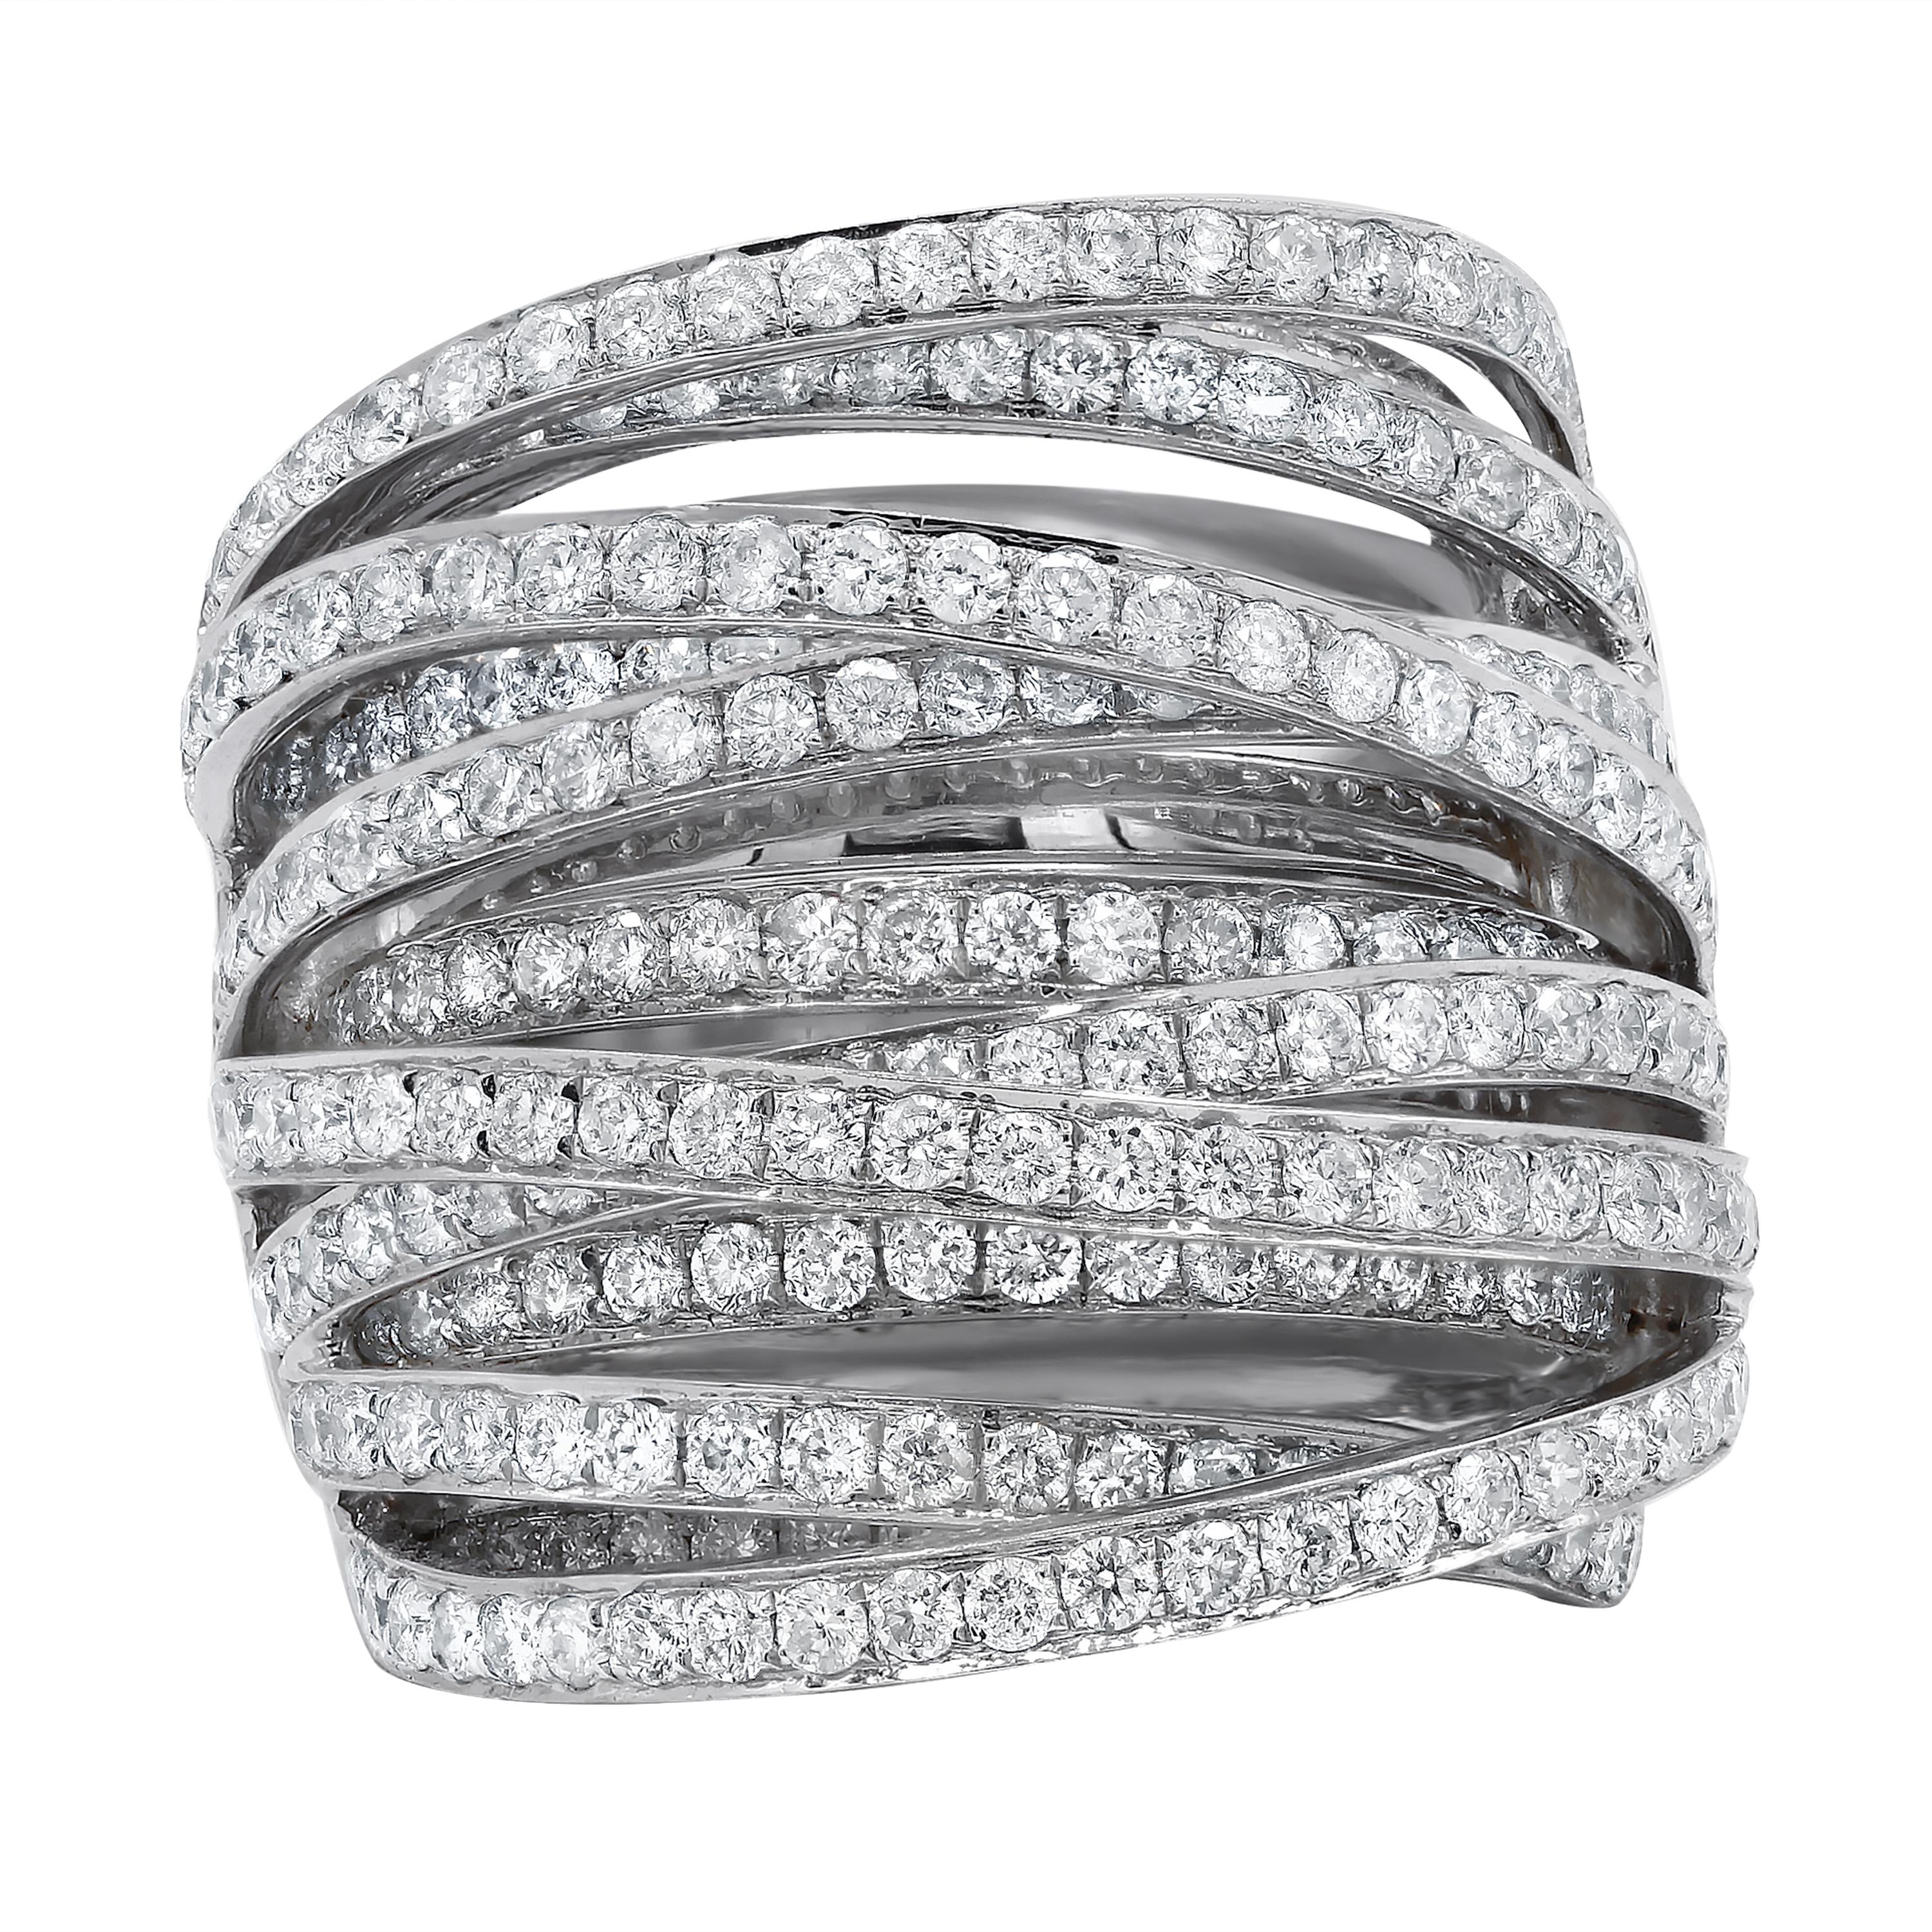 White Gold 4.50 Carat Diamond Multi-Row Ring